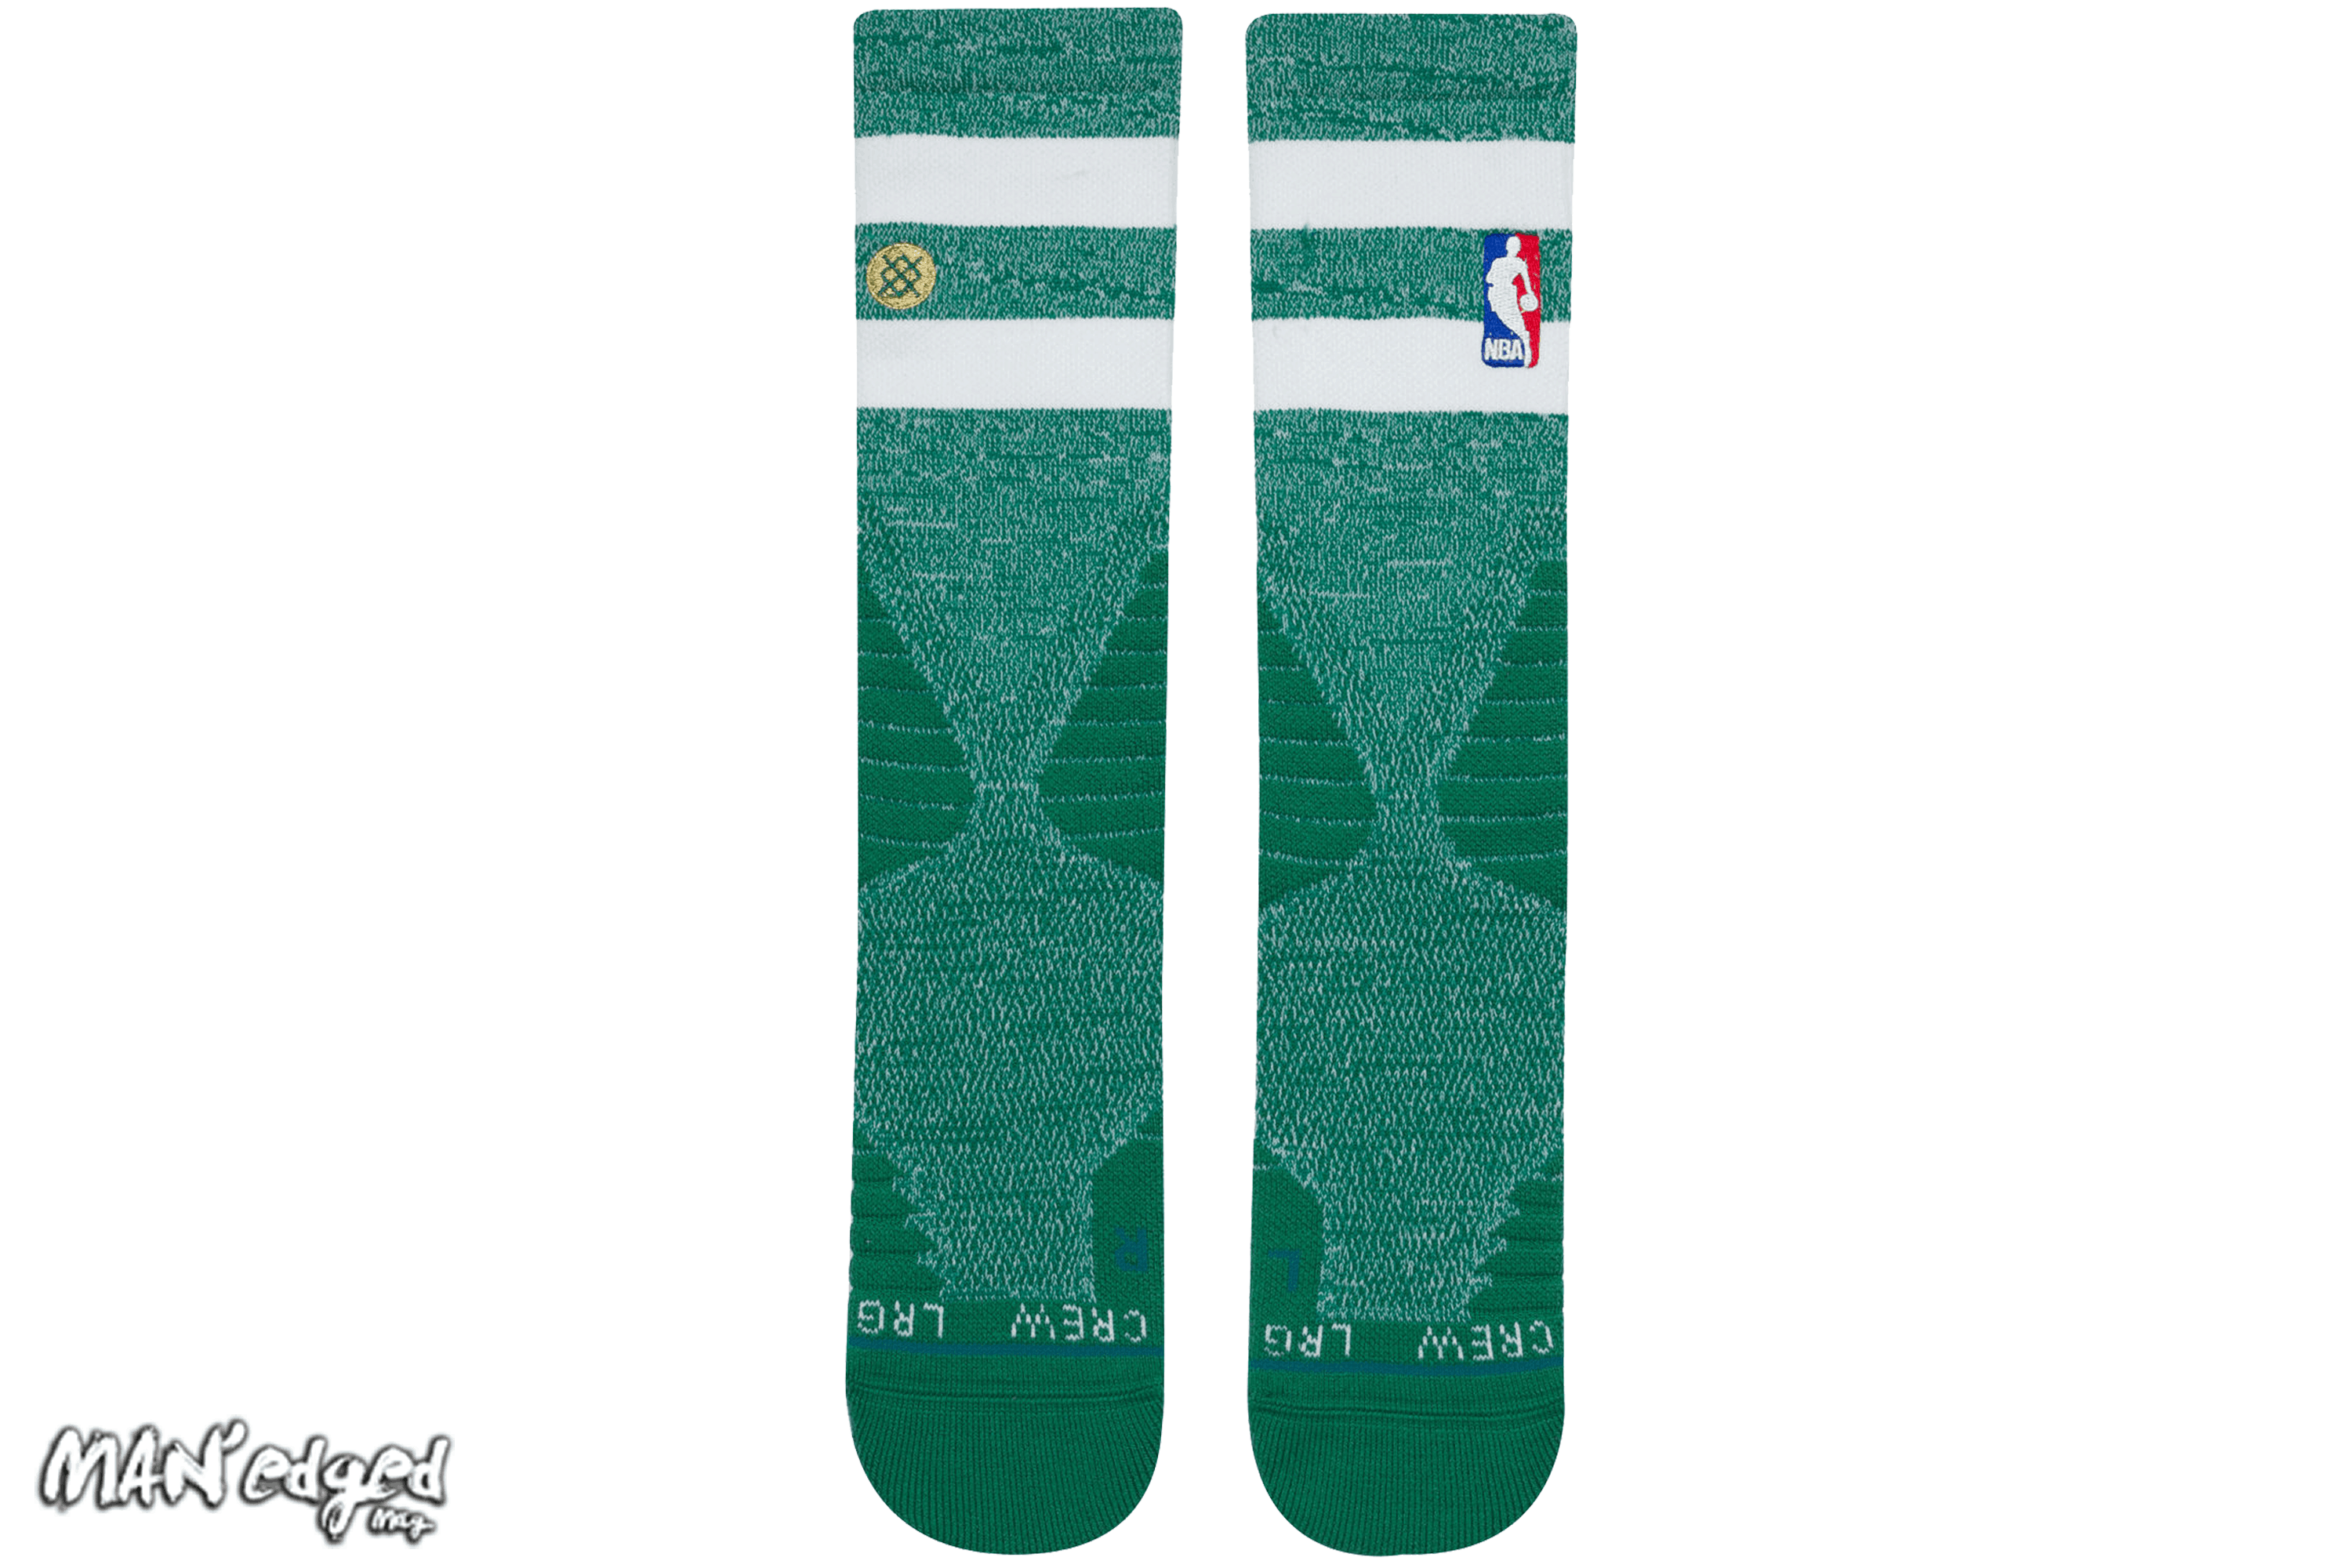 Green Stance men's NBA socks, featured in MAN'edged Magazine St Patricks Day men's style round up